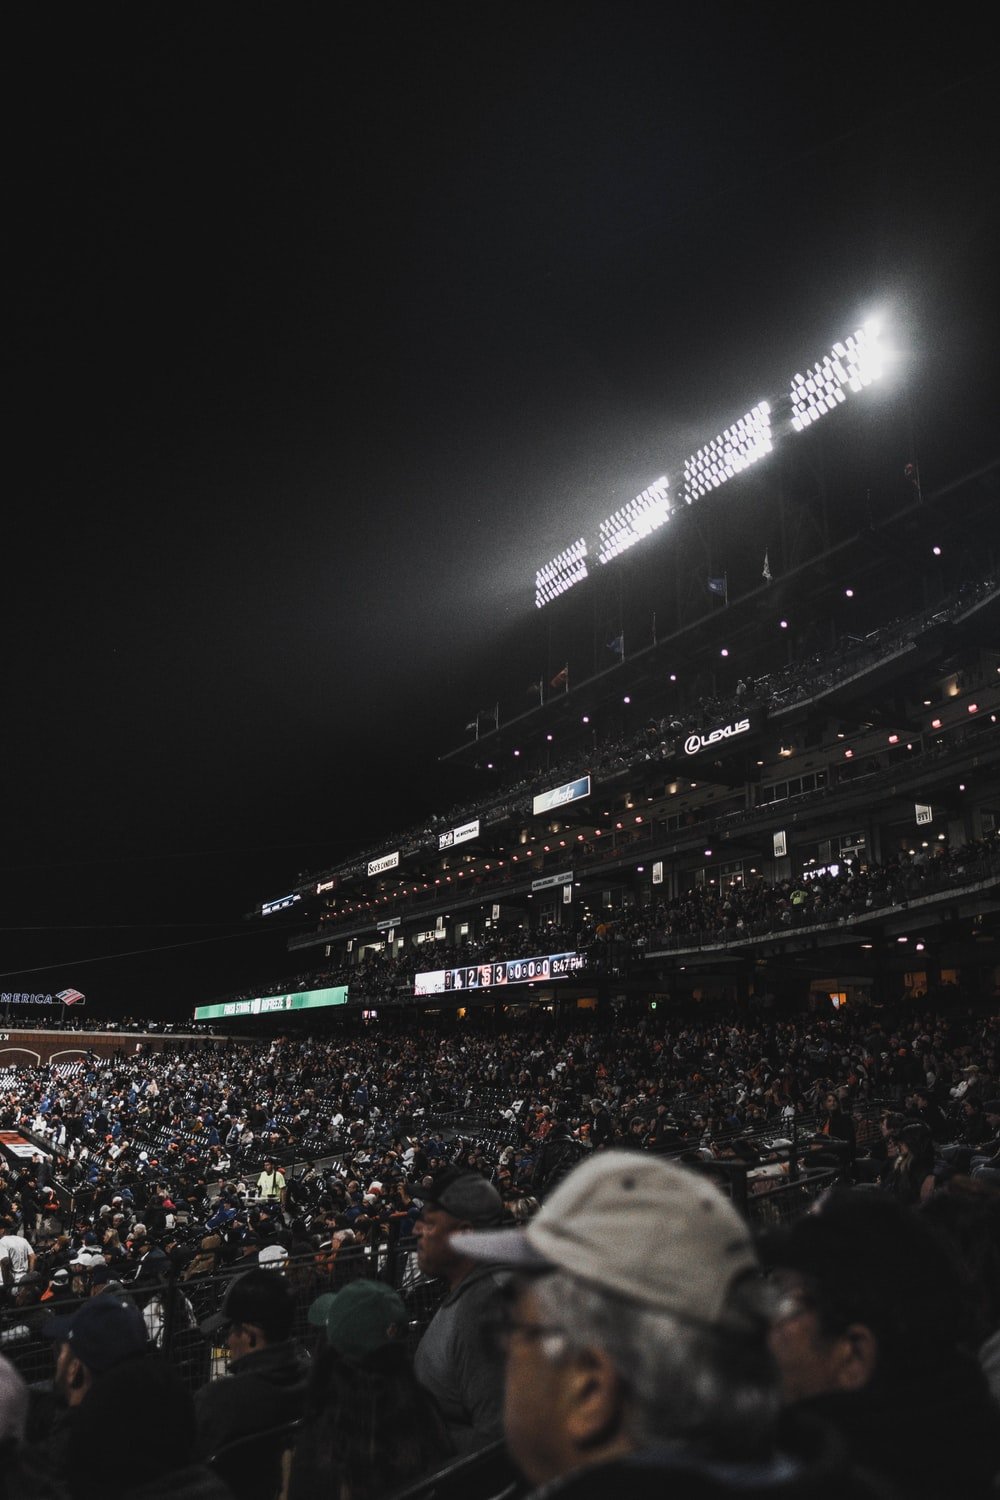 Stadium Lights Picture. Download Free Image